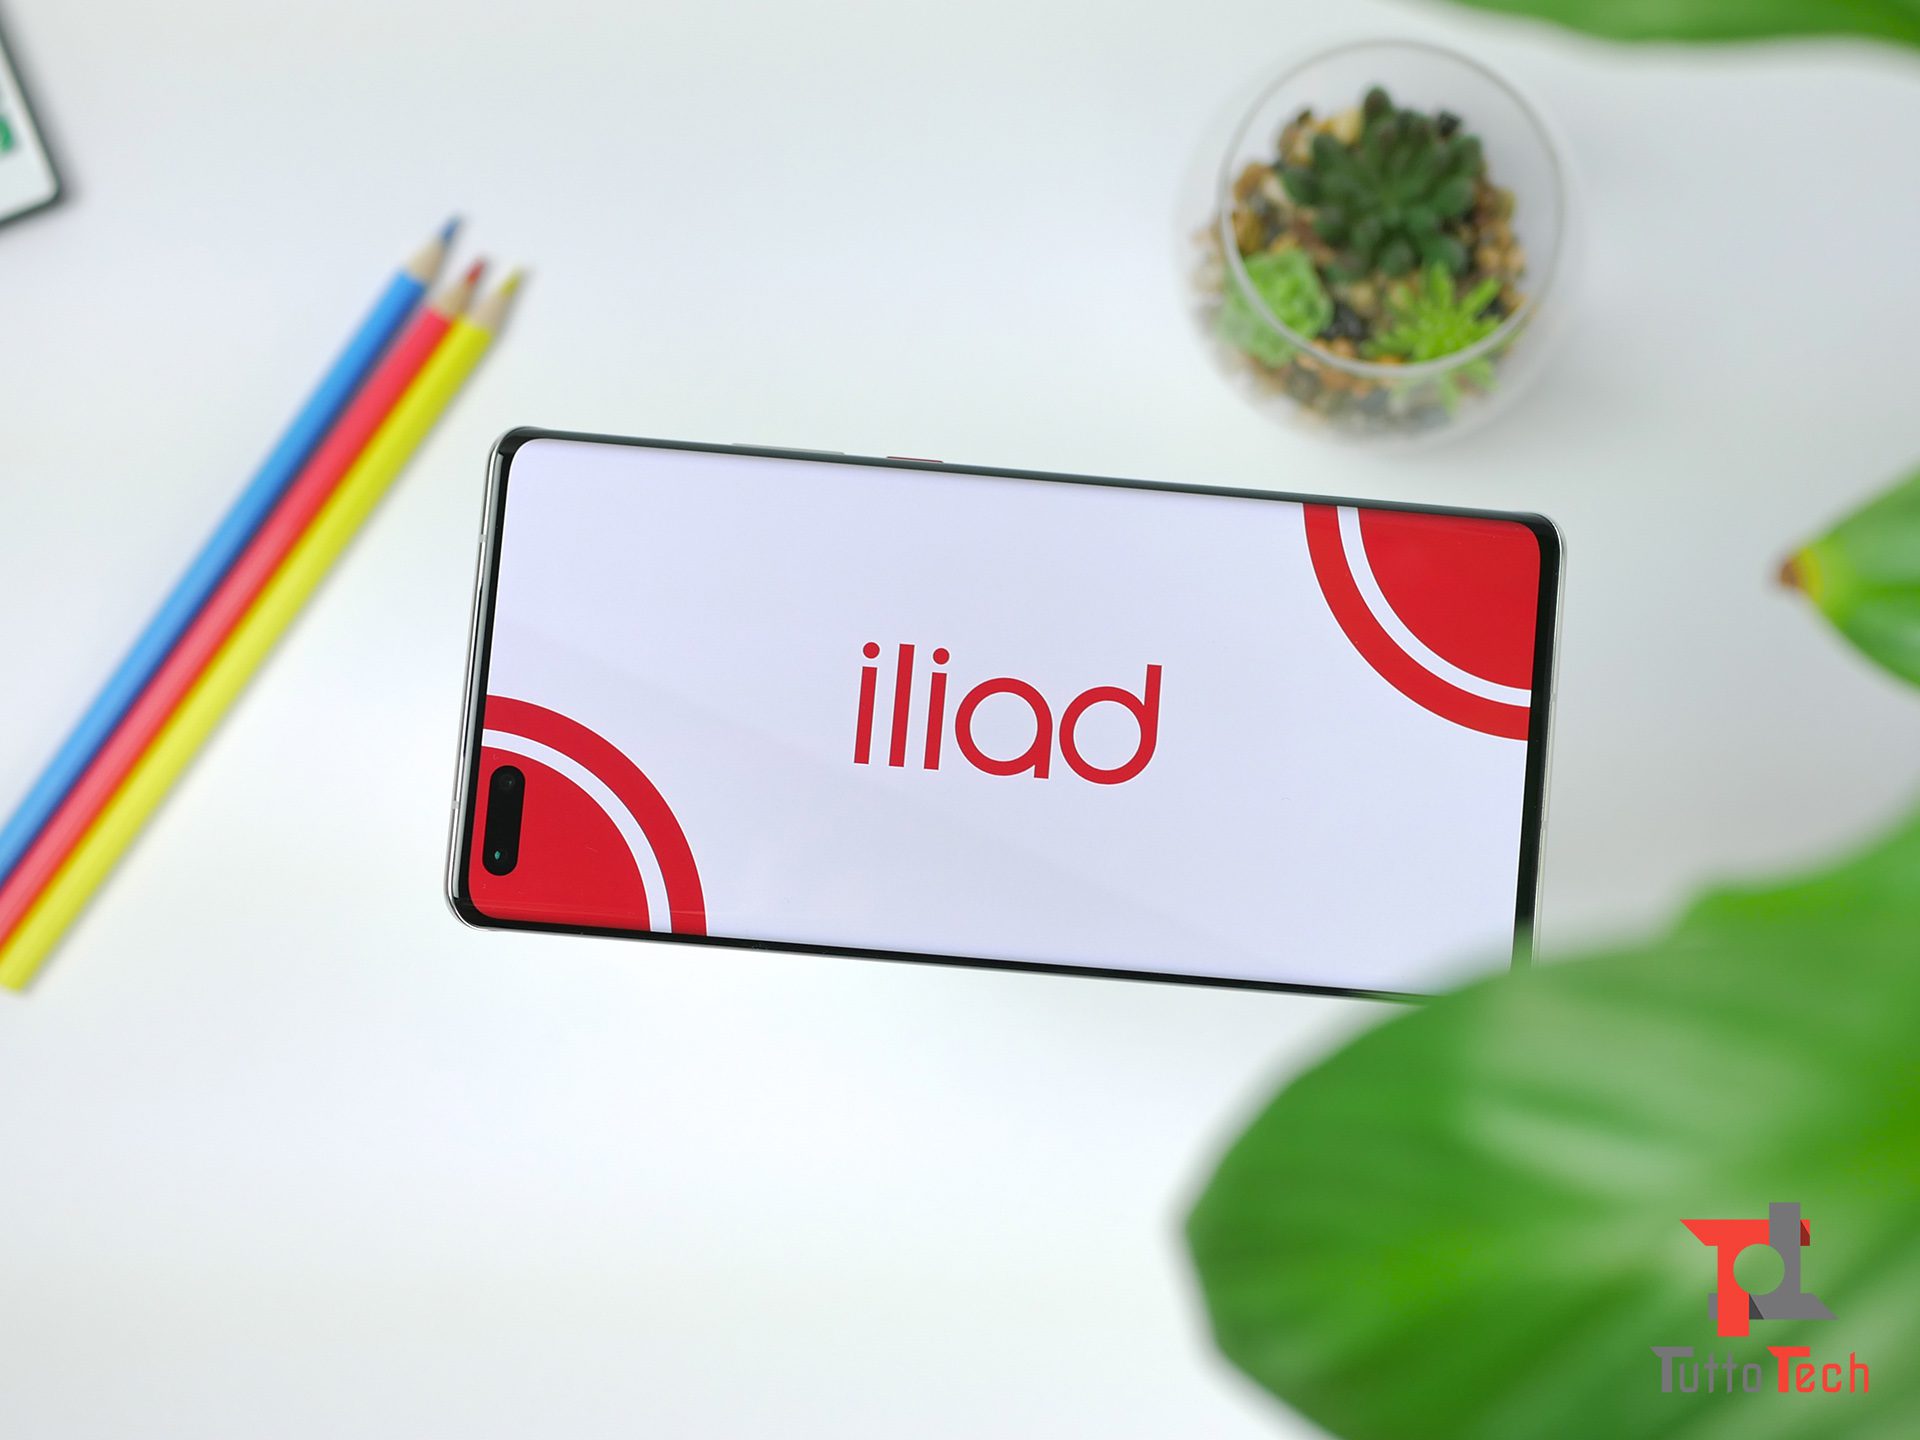 Iliad Italia هي المشغل الأسرع نموًا في جميع أنحاء العالم 1